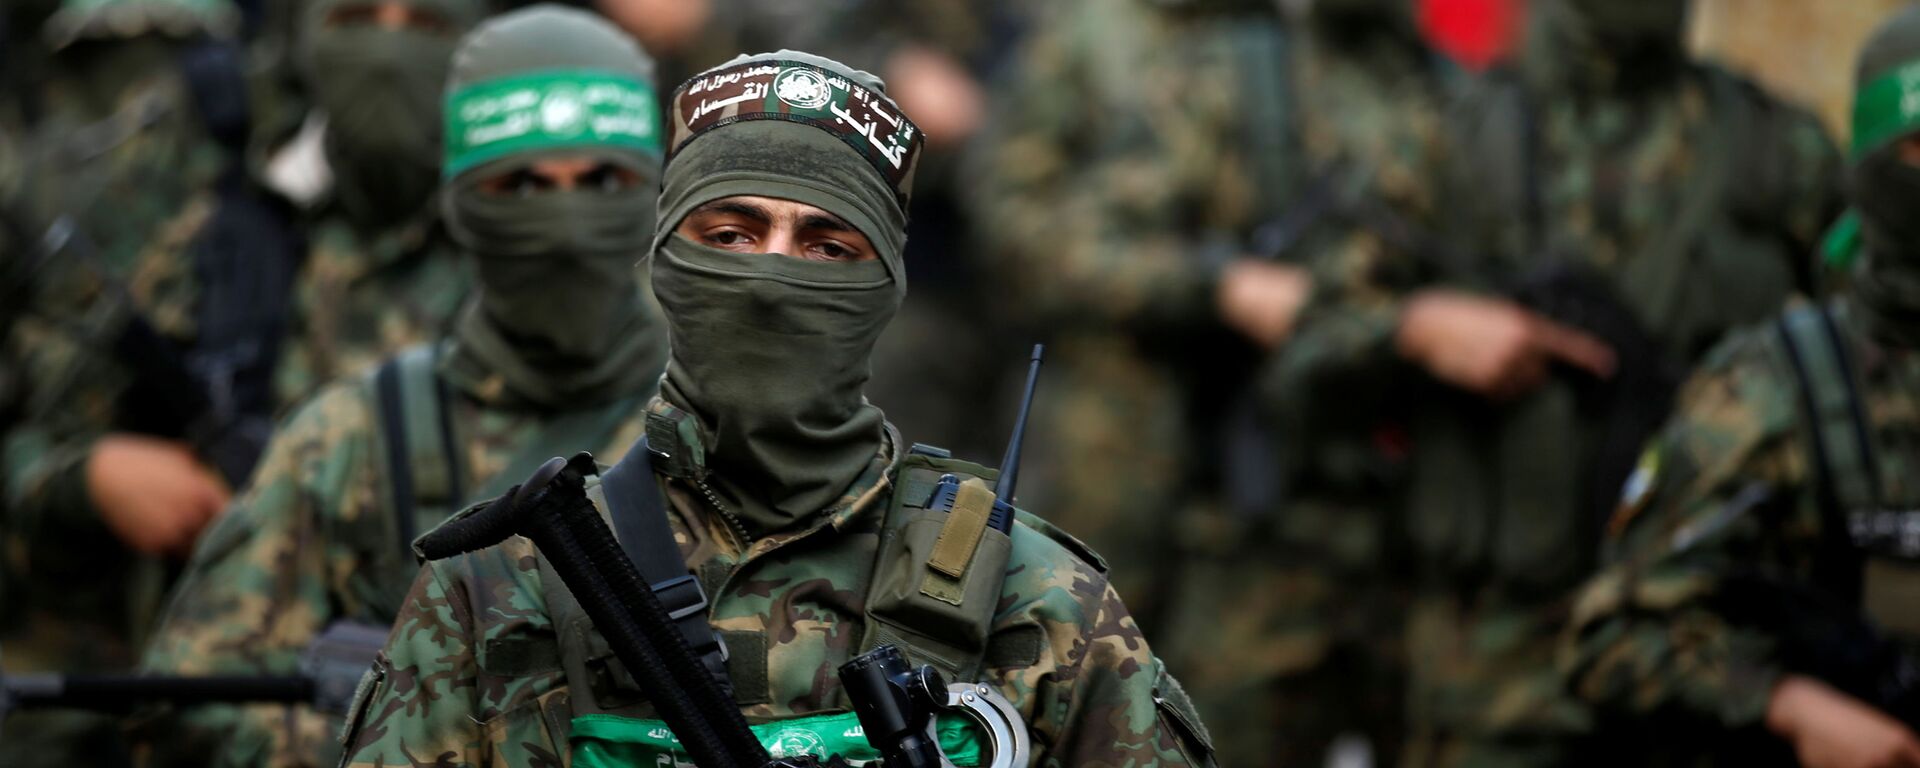 Palestinian Hamas militants take part in an anti-Israel rally in Gaza City May 22, 2021. REUTERS/Mohammed Salem - Sputnik International, 1920, 24.11.2021